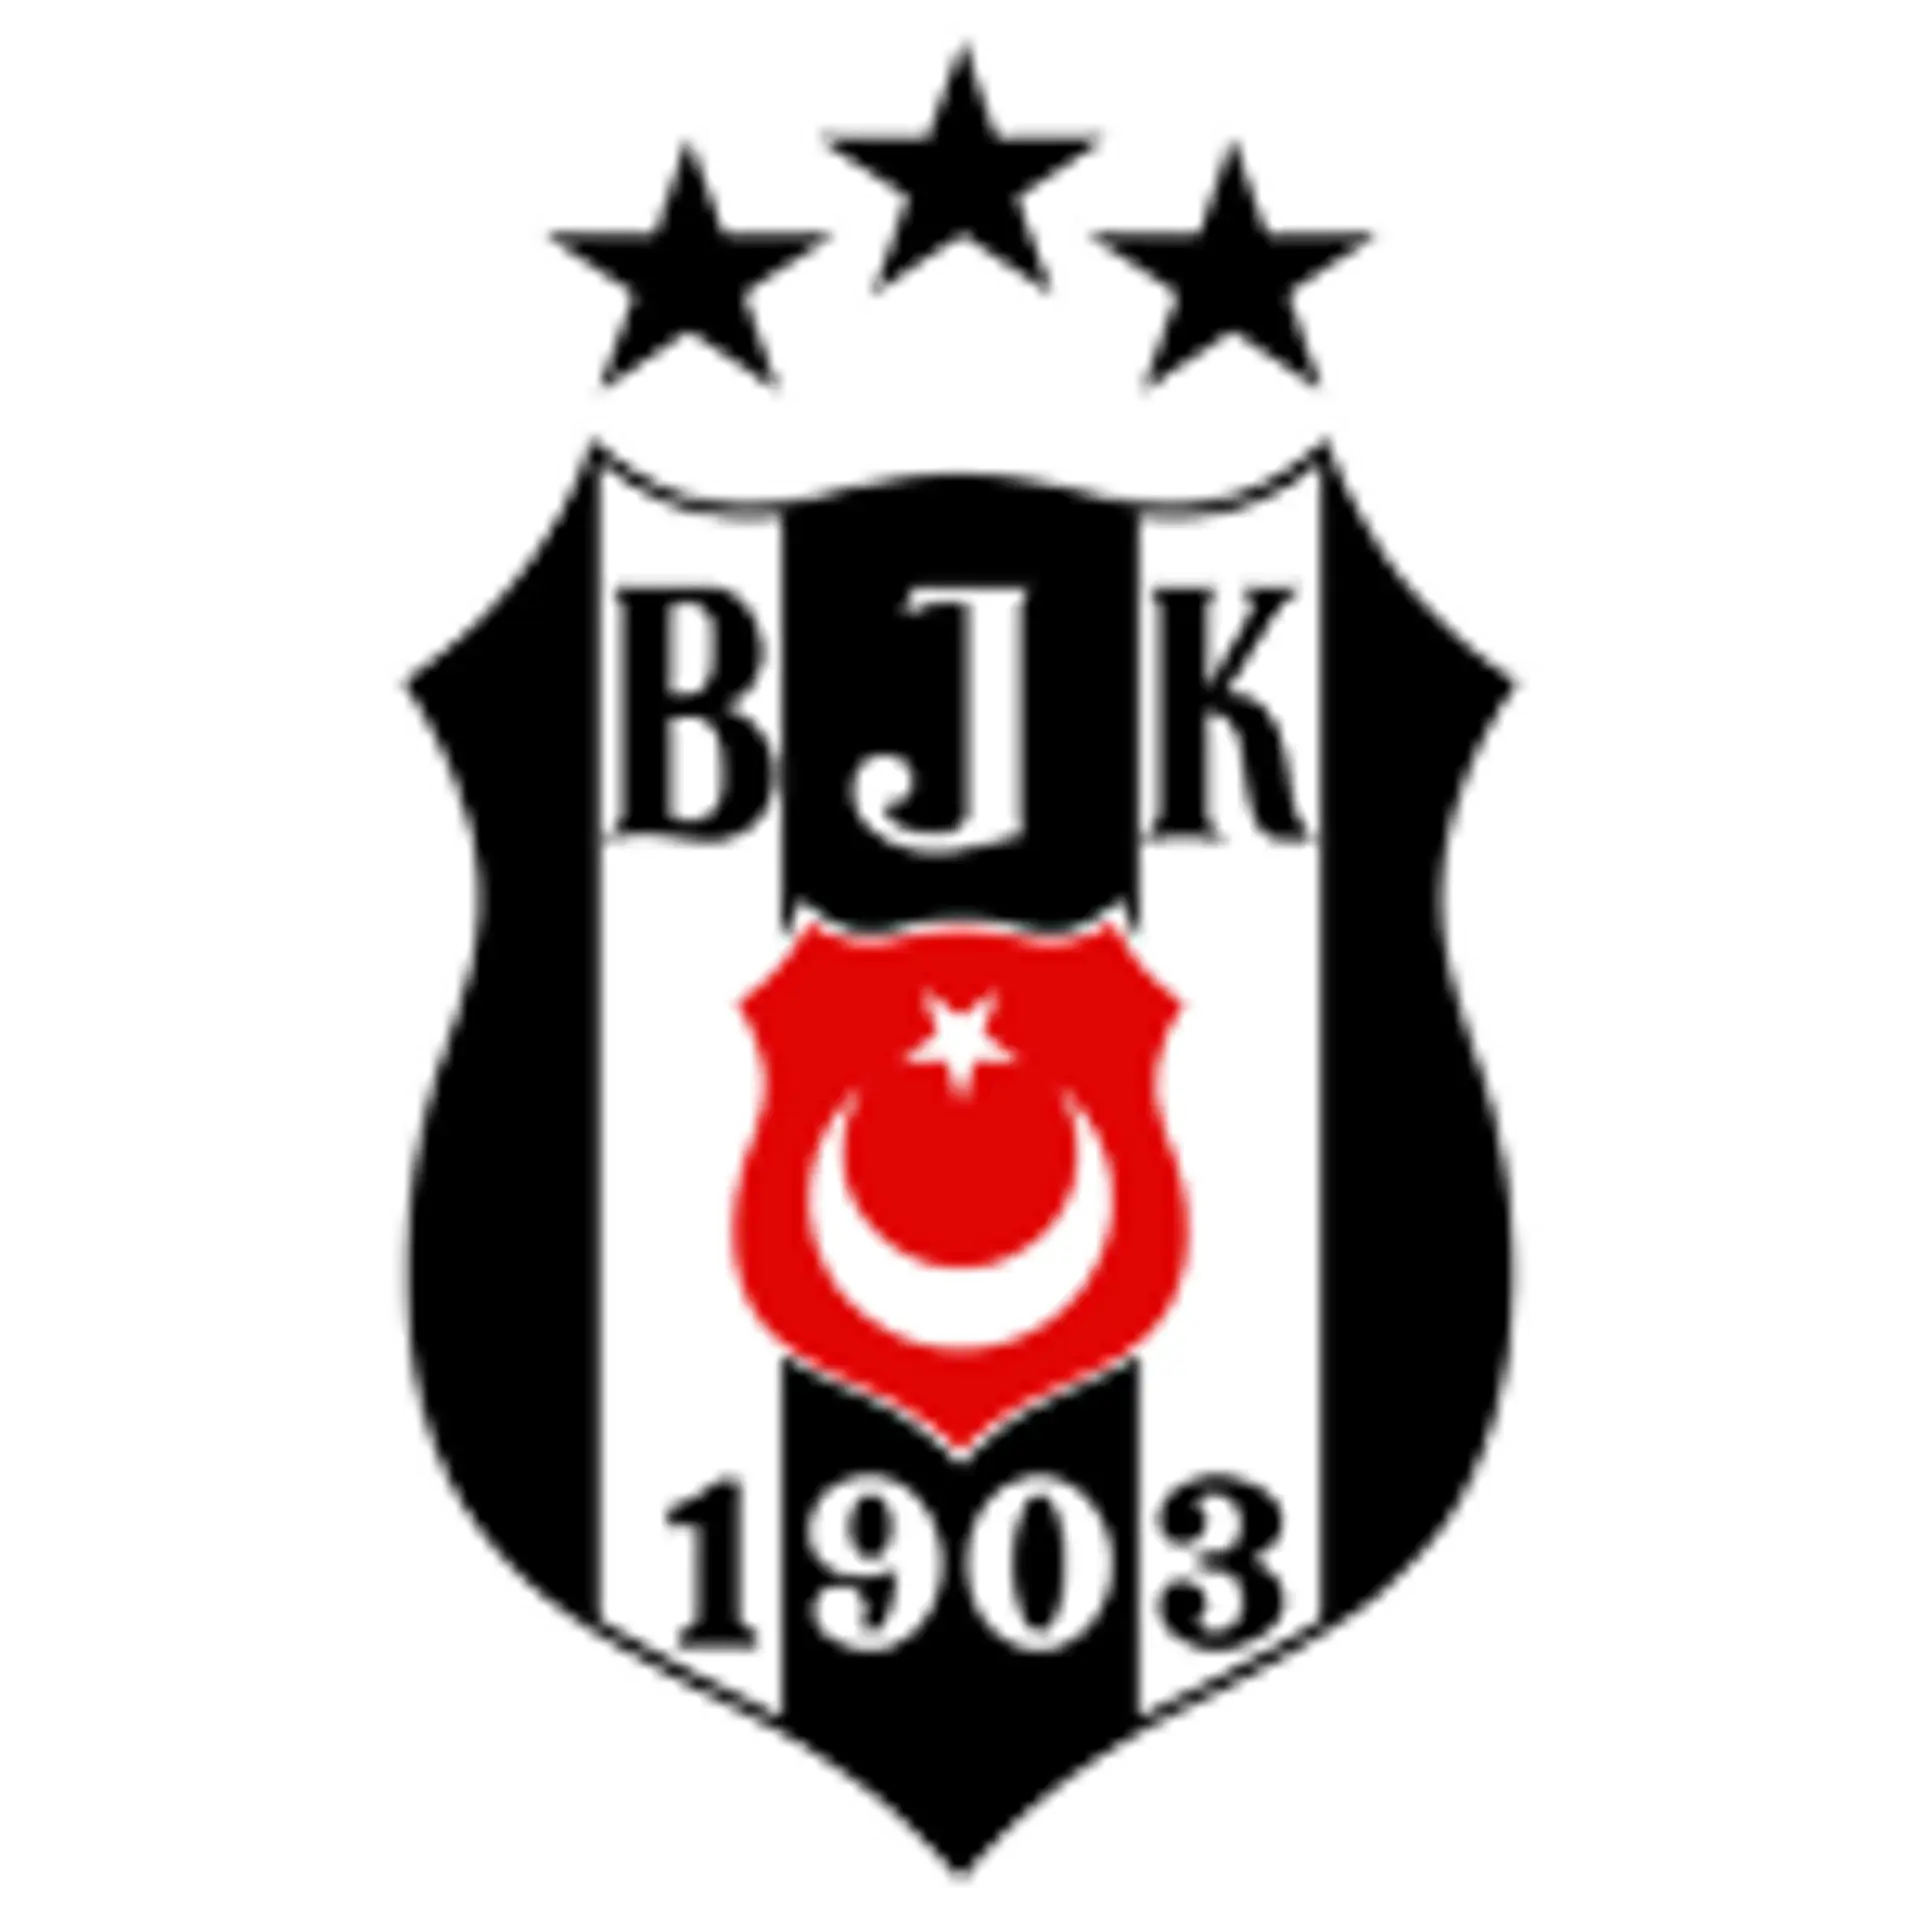 İstanbulspor vs Besiktas JK: Live Score, Stream and H2H results 2/24/2024.  Preview match İstanbulspor vs Besiktas JK, team, start time.